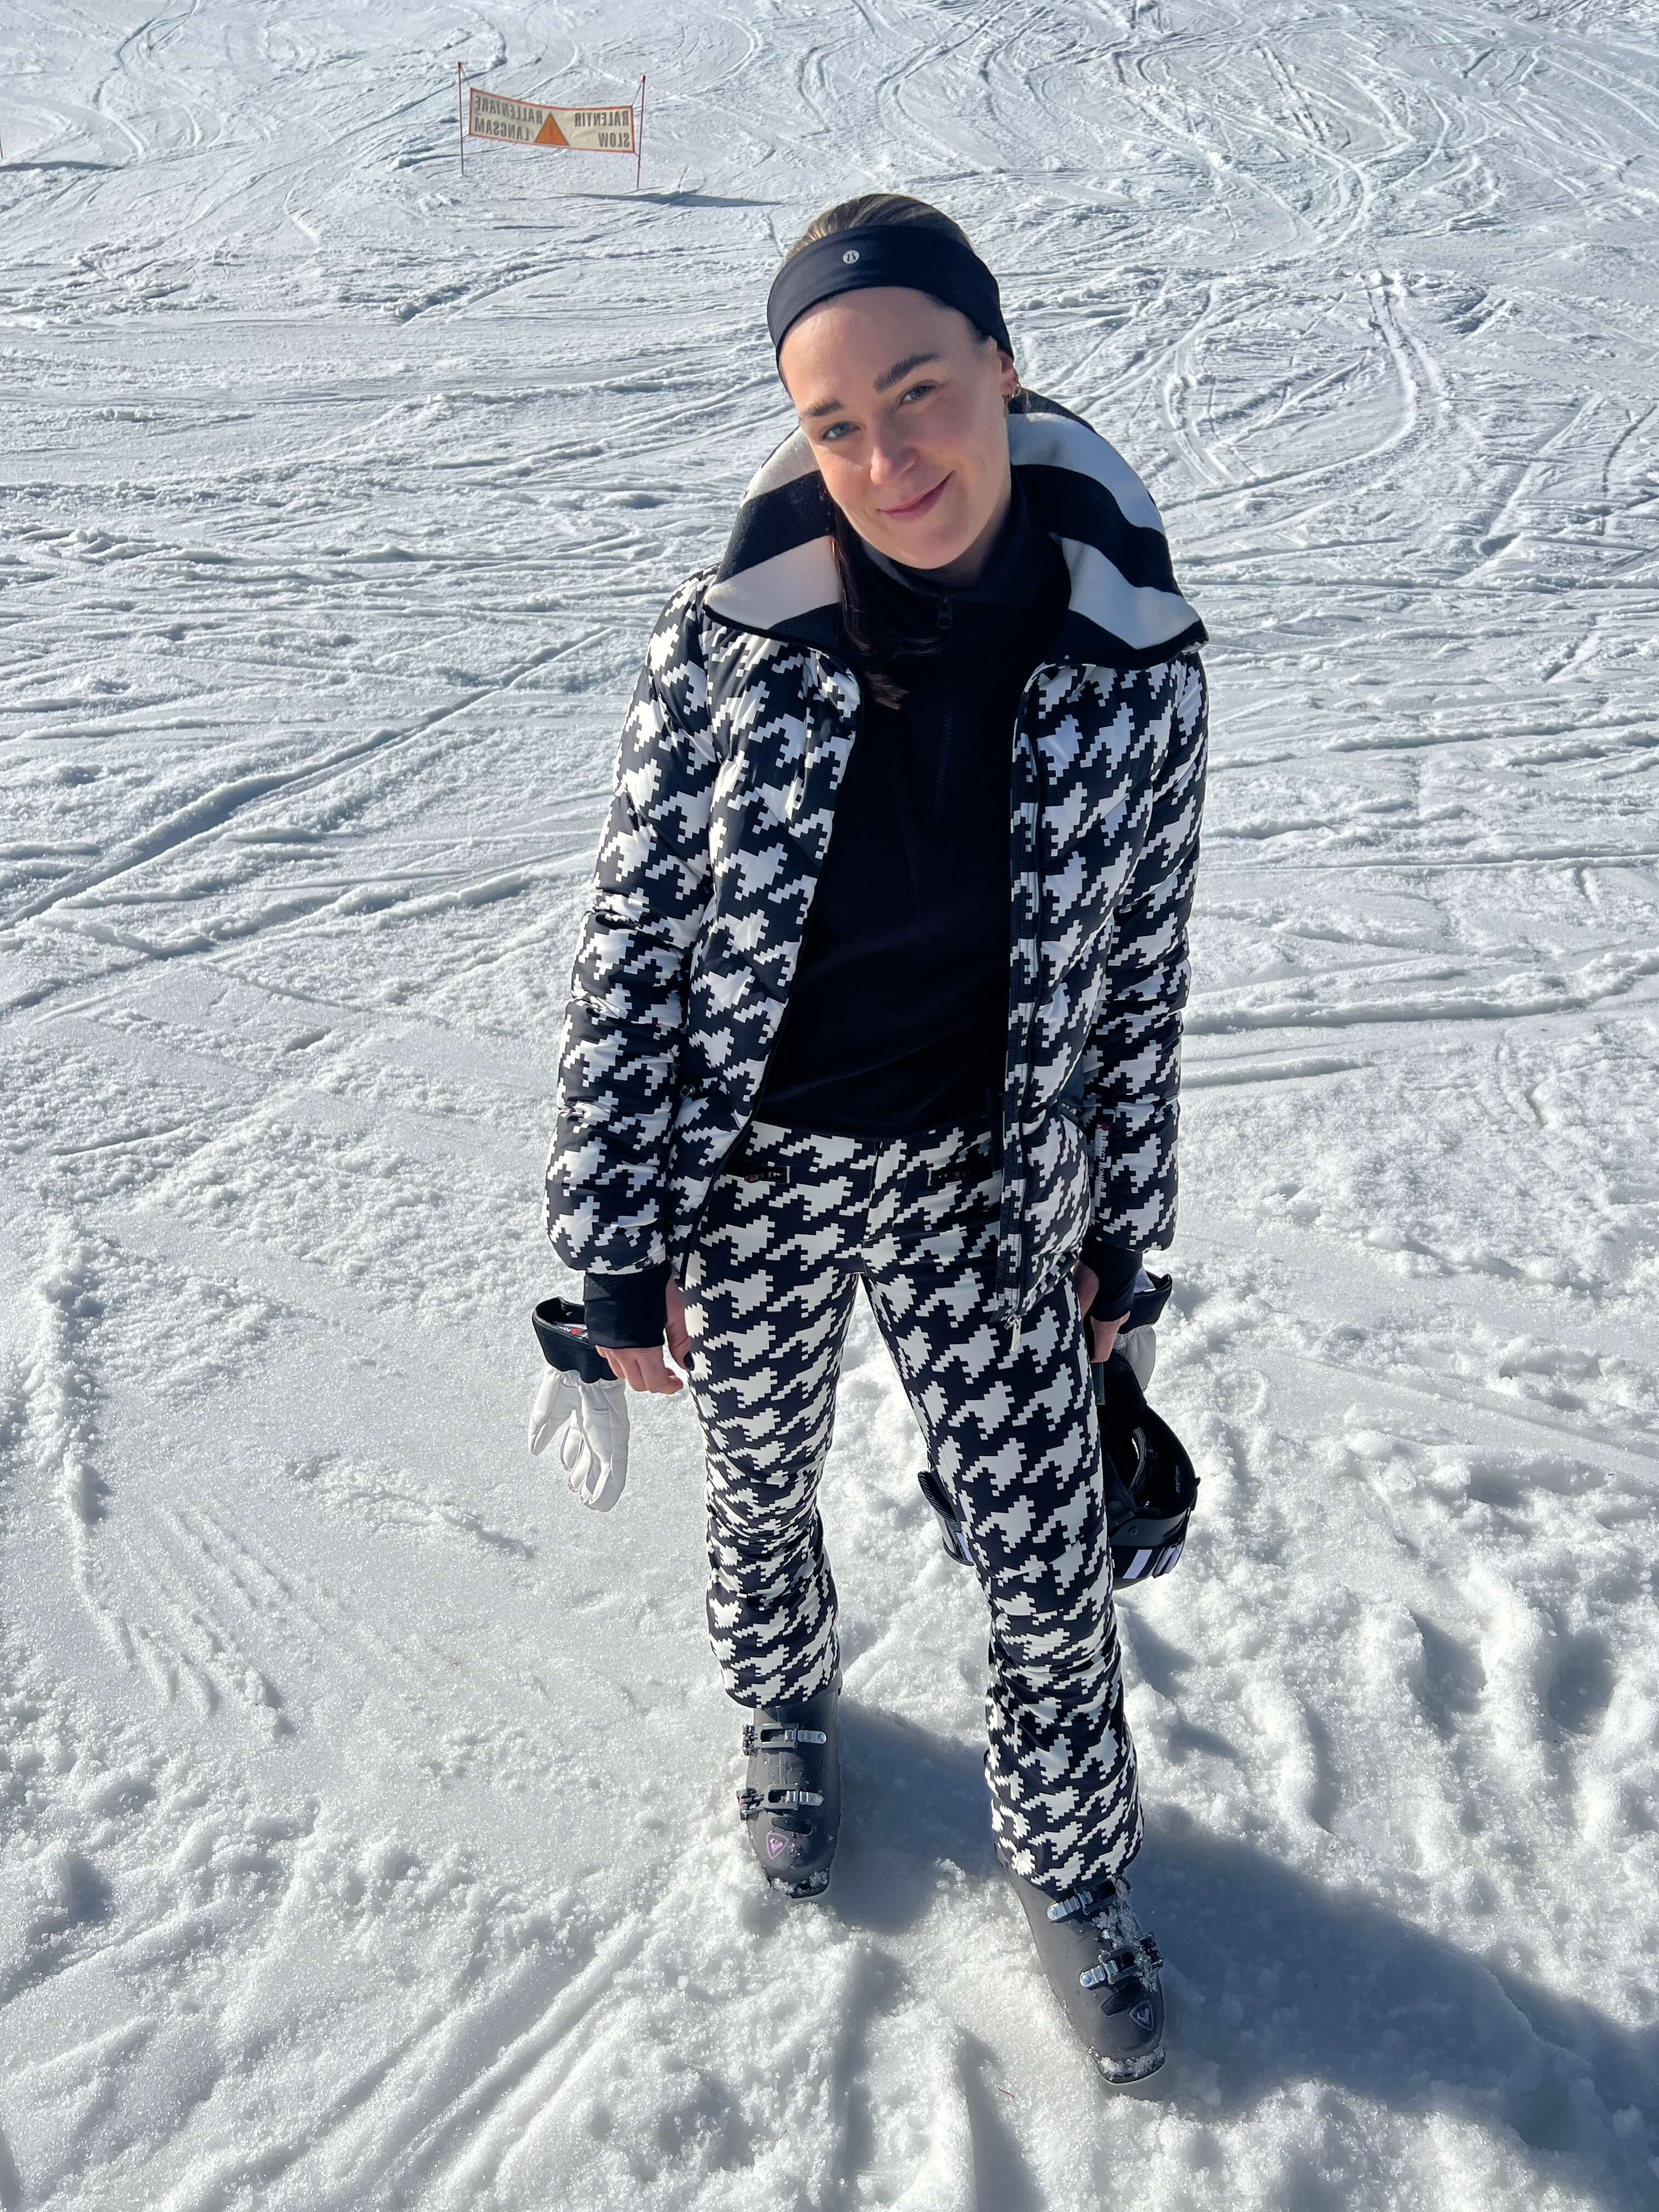 Perfect Moment 'AURORA' Star Gingham Black Print Ski Pants in Size L - MSRP  $550